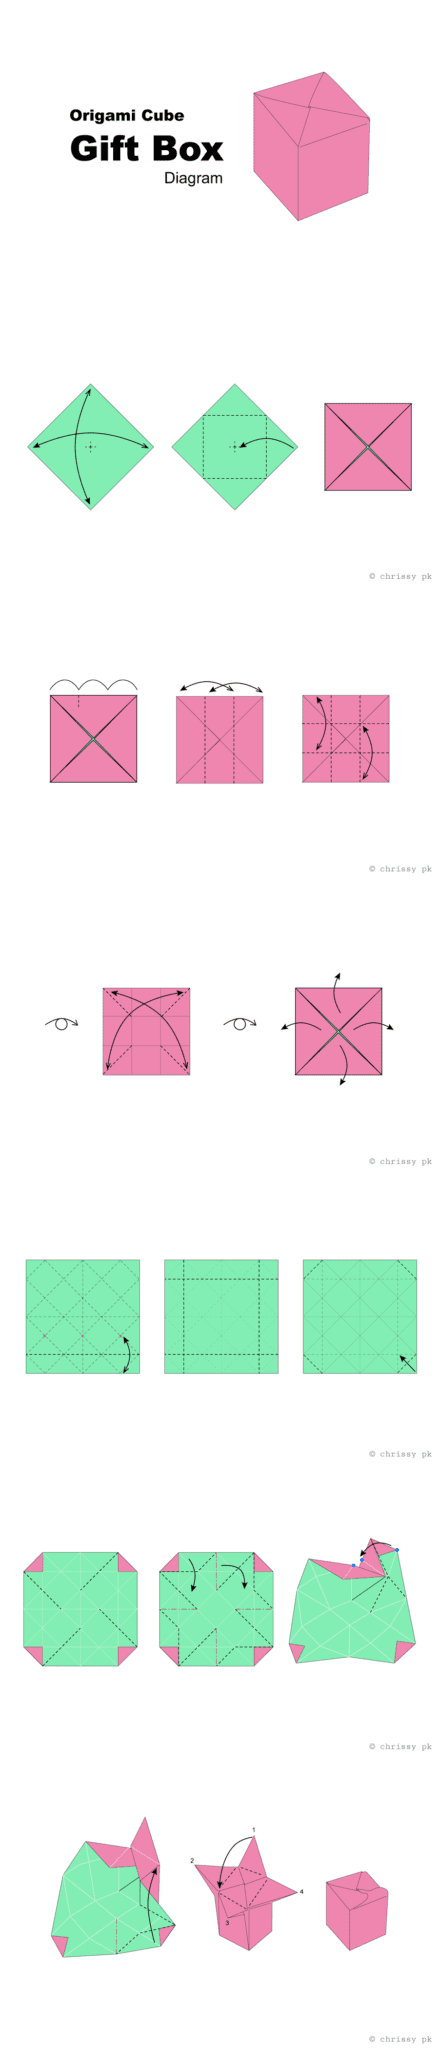 origami cherry blossom instructions pdf